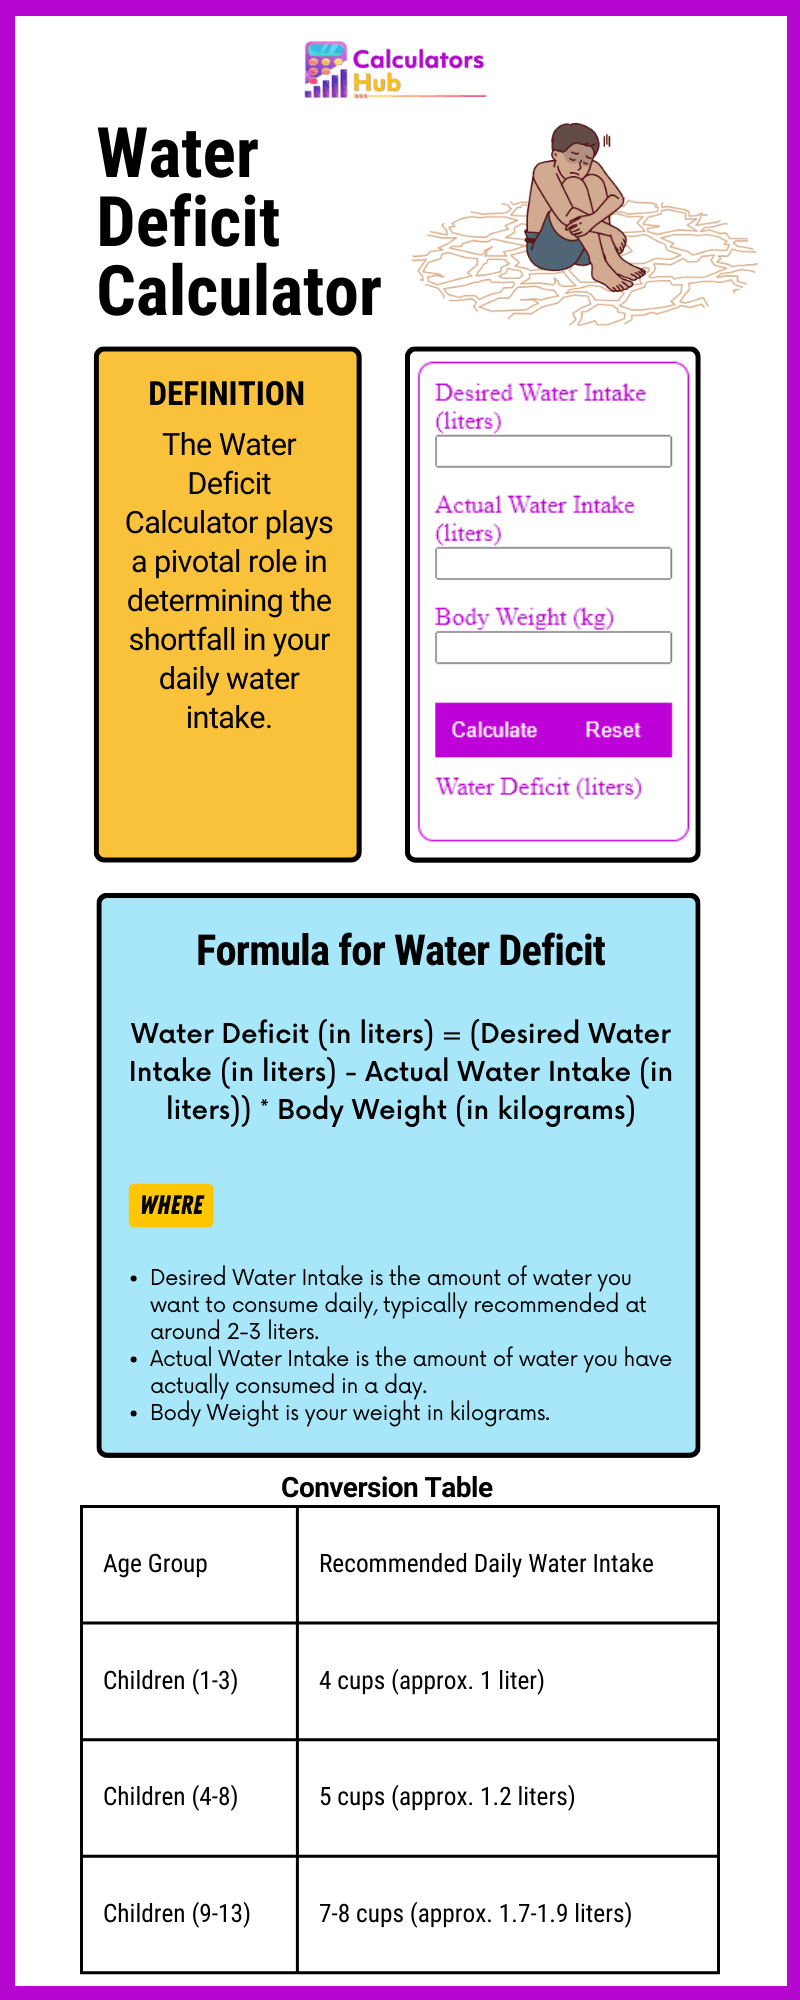 Water Deficit Calculator